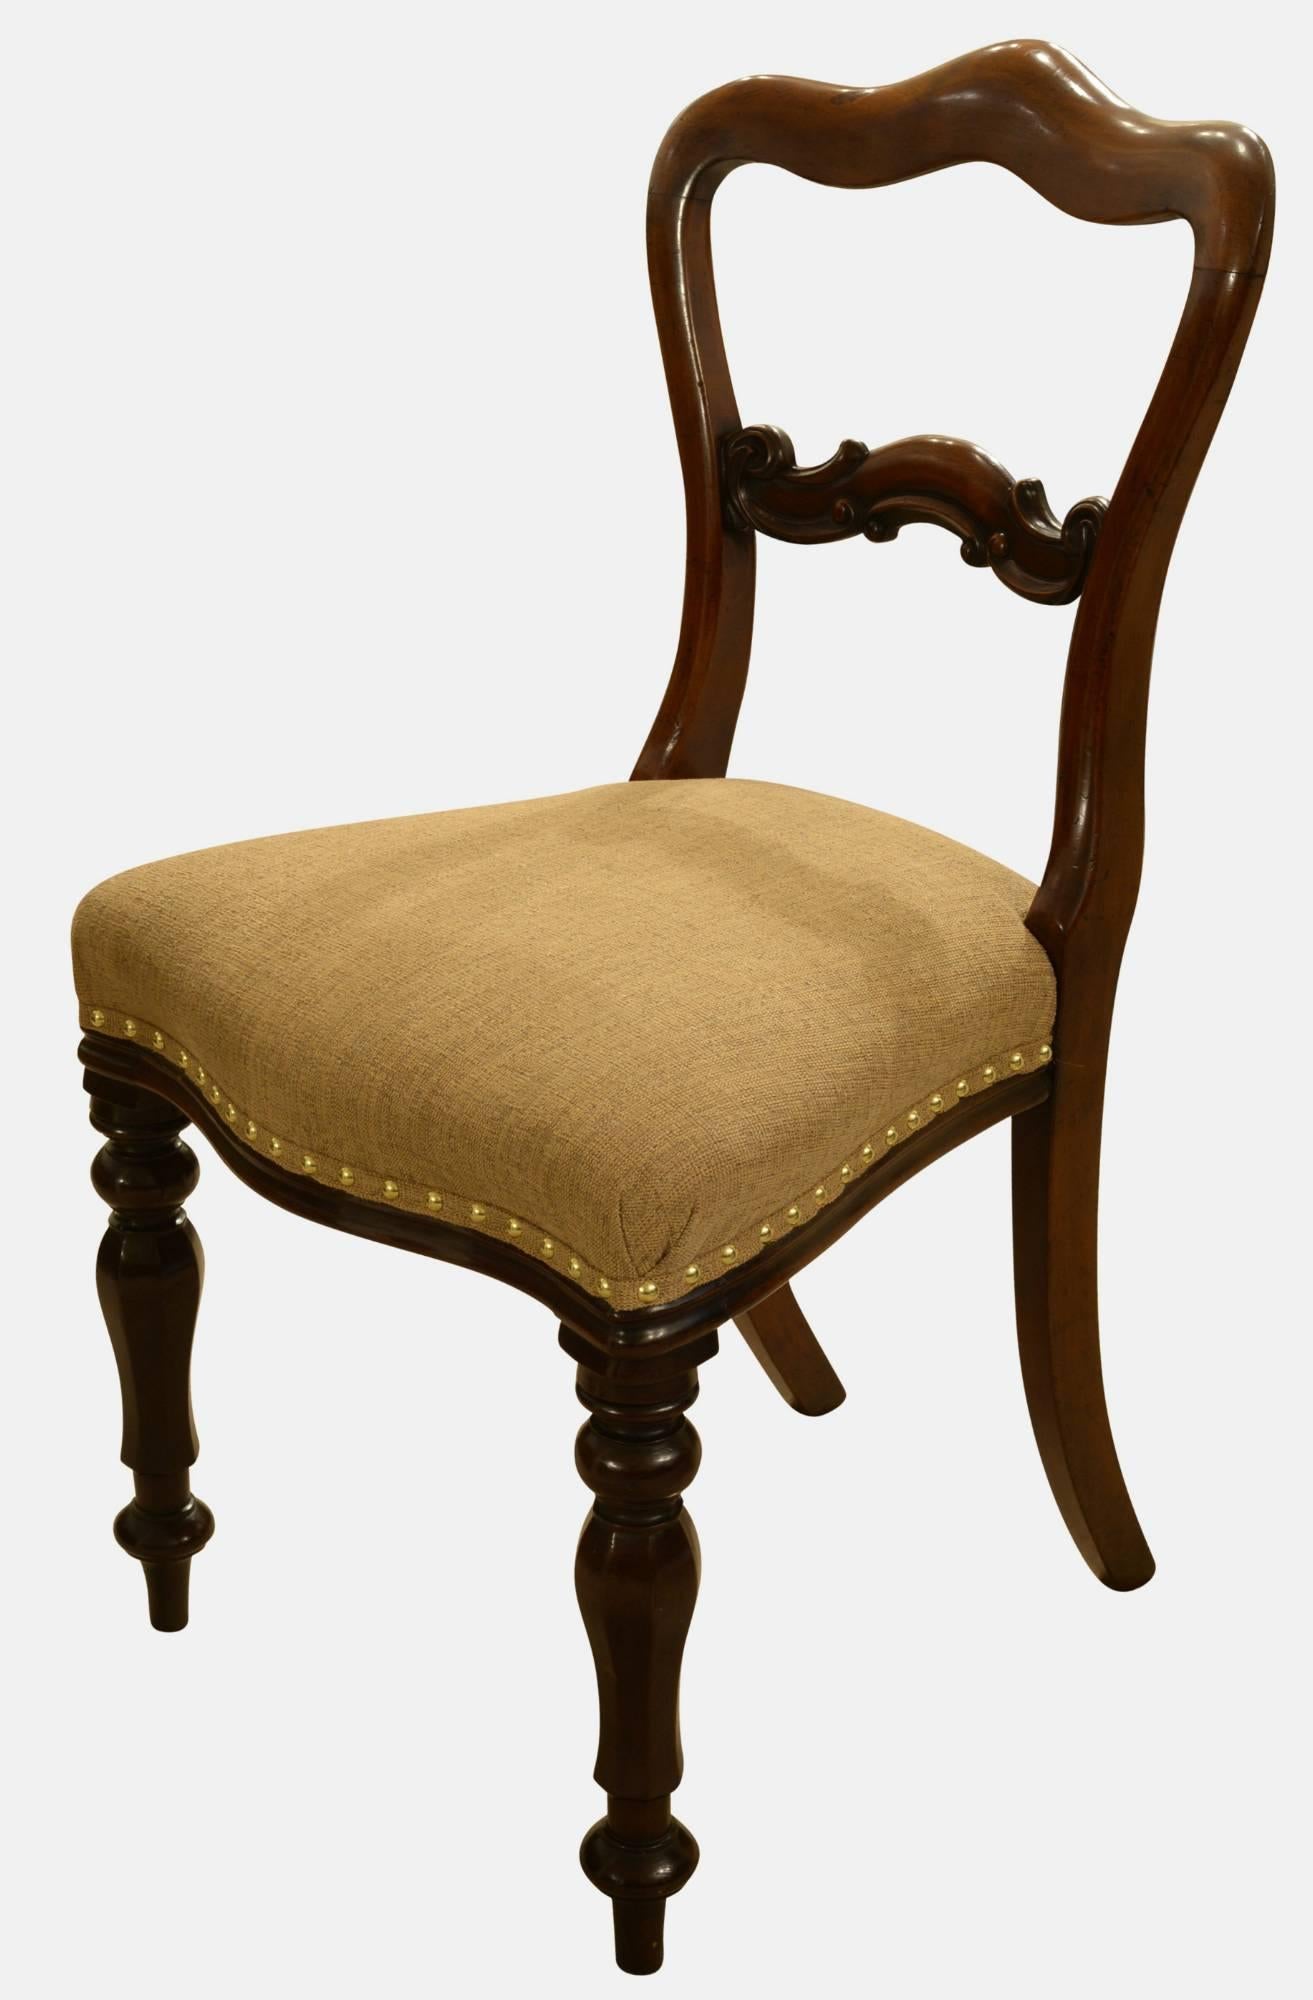 A set of six mahogany Victorian period chairs,

circa 1870.